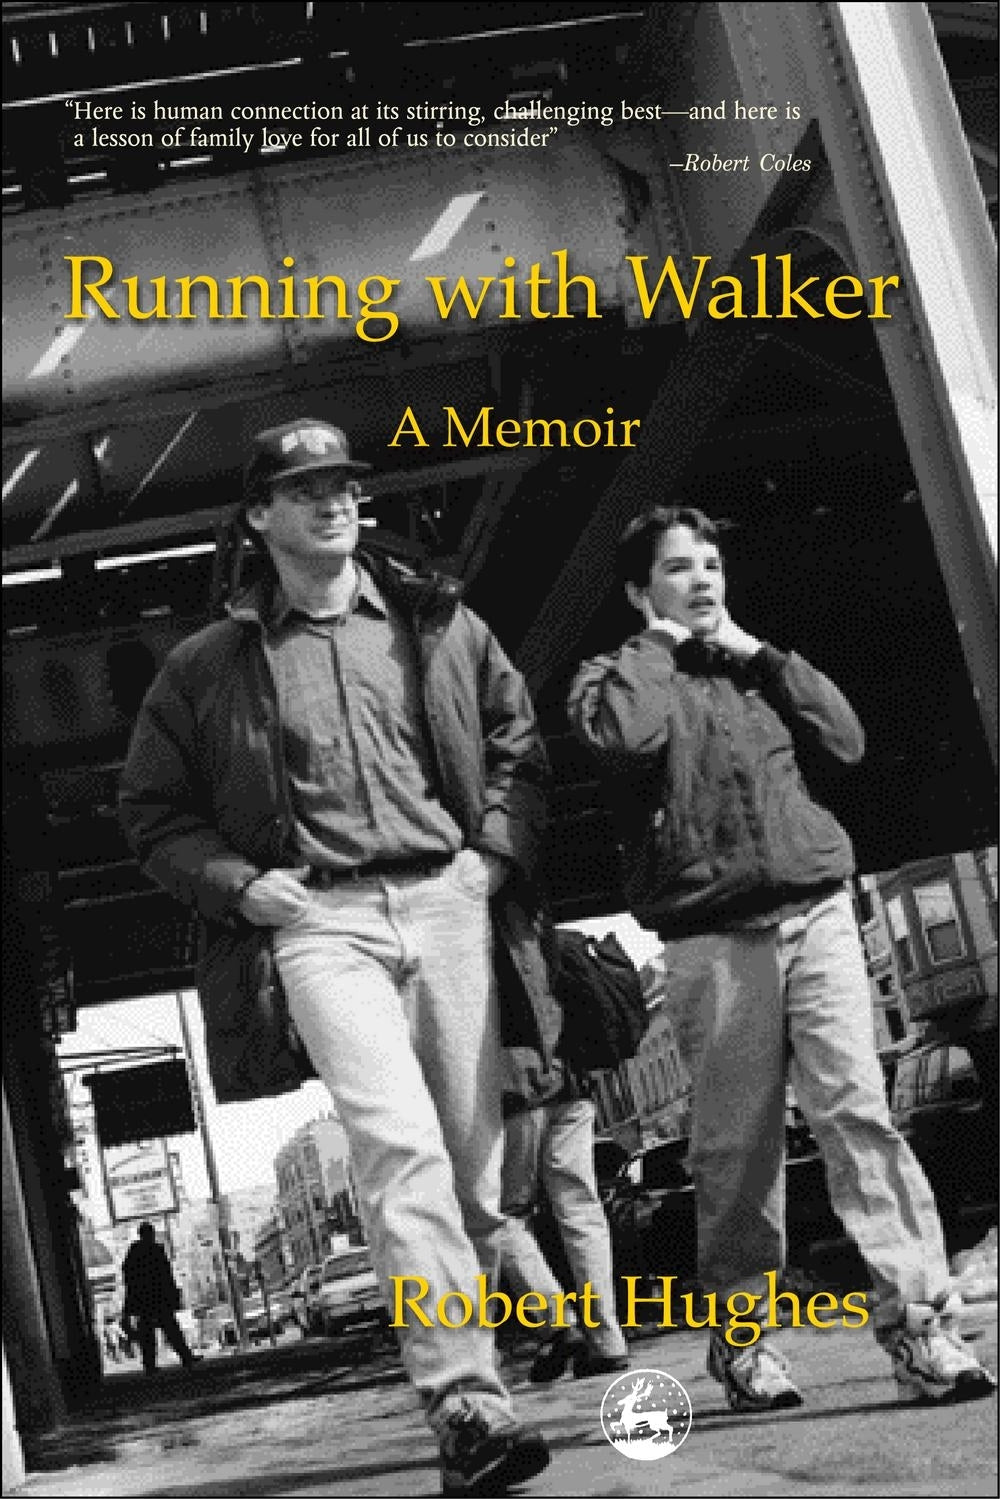 Running with Walker by Robert Hughes